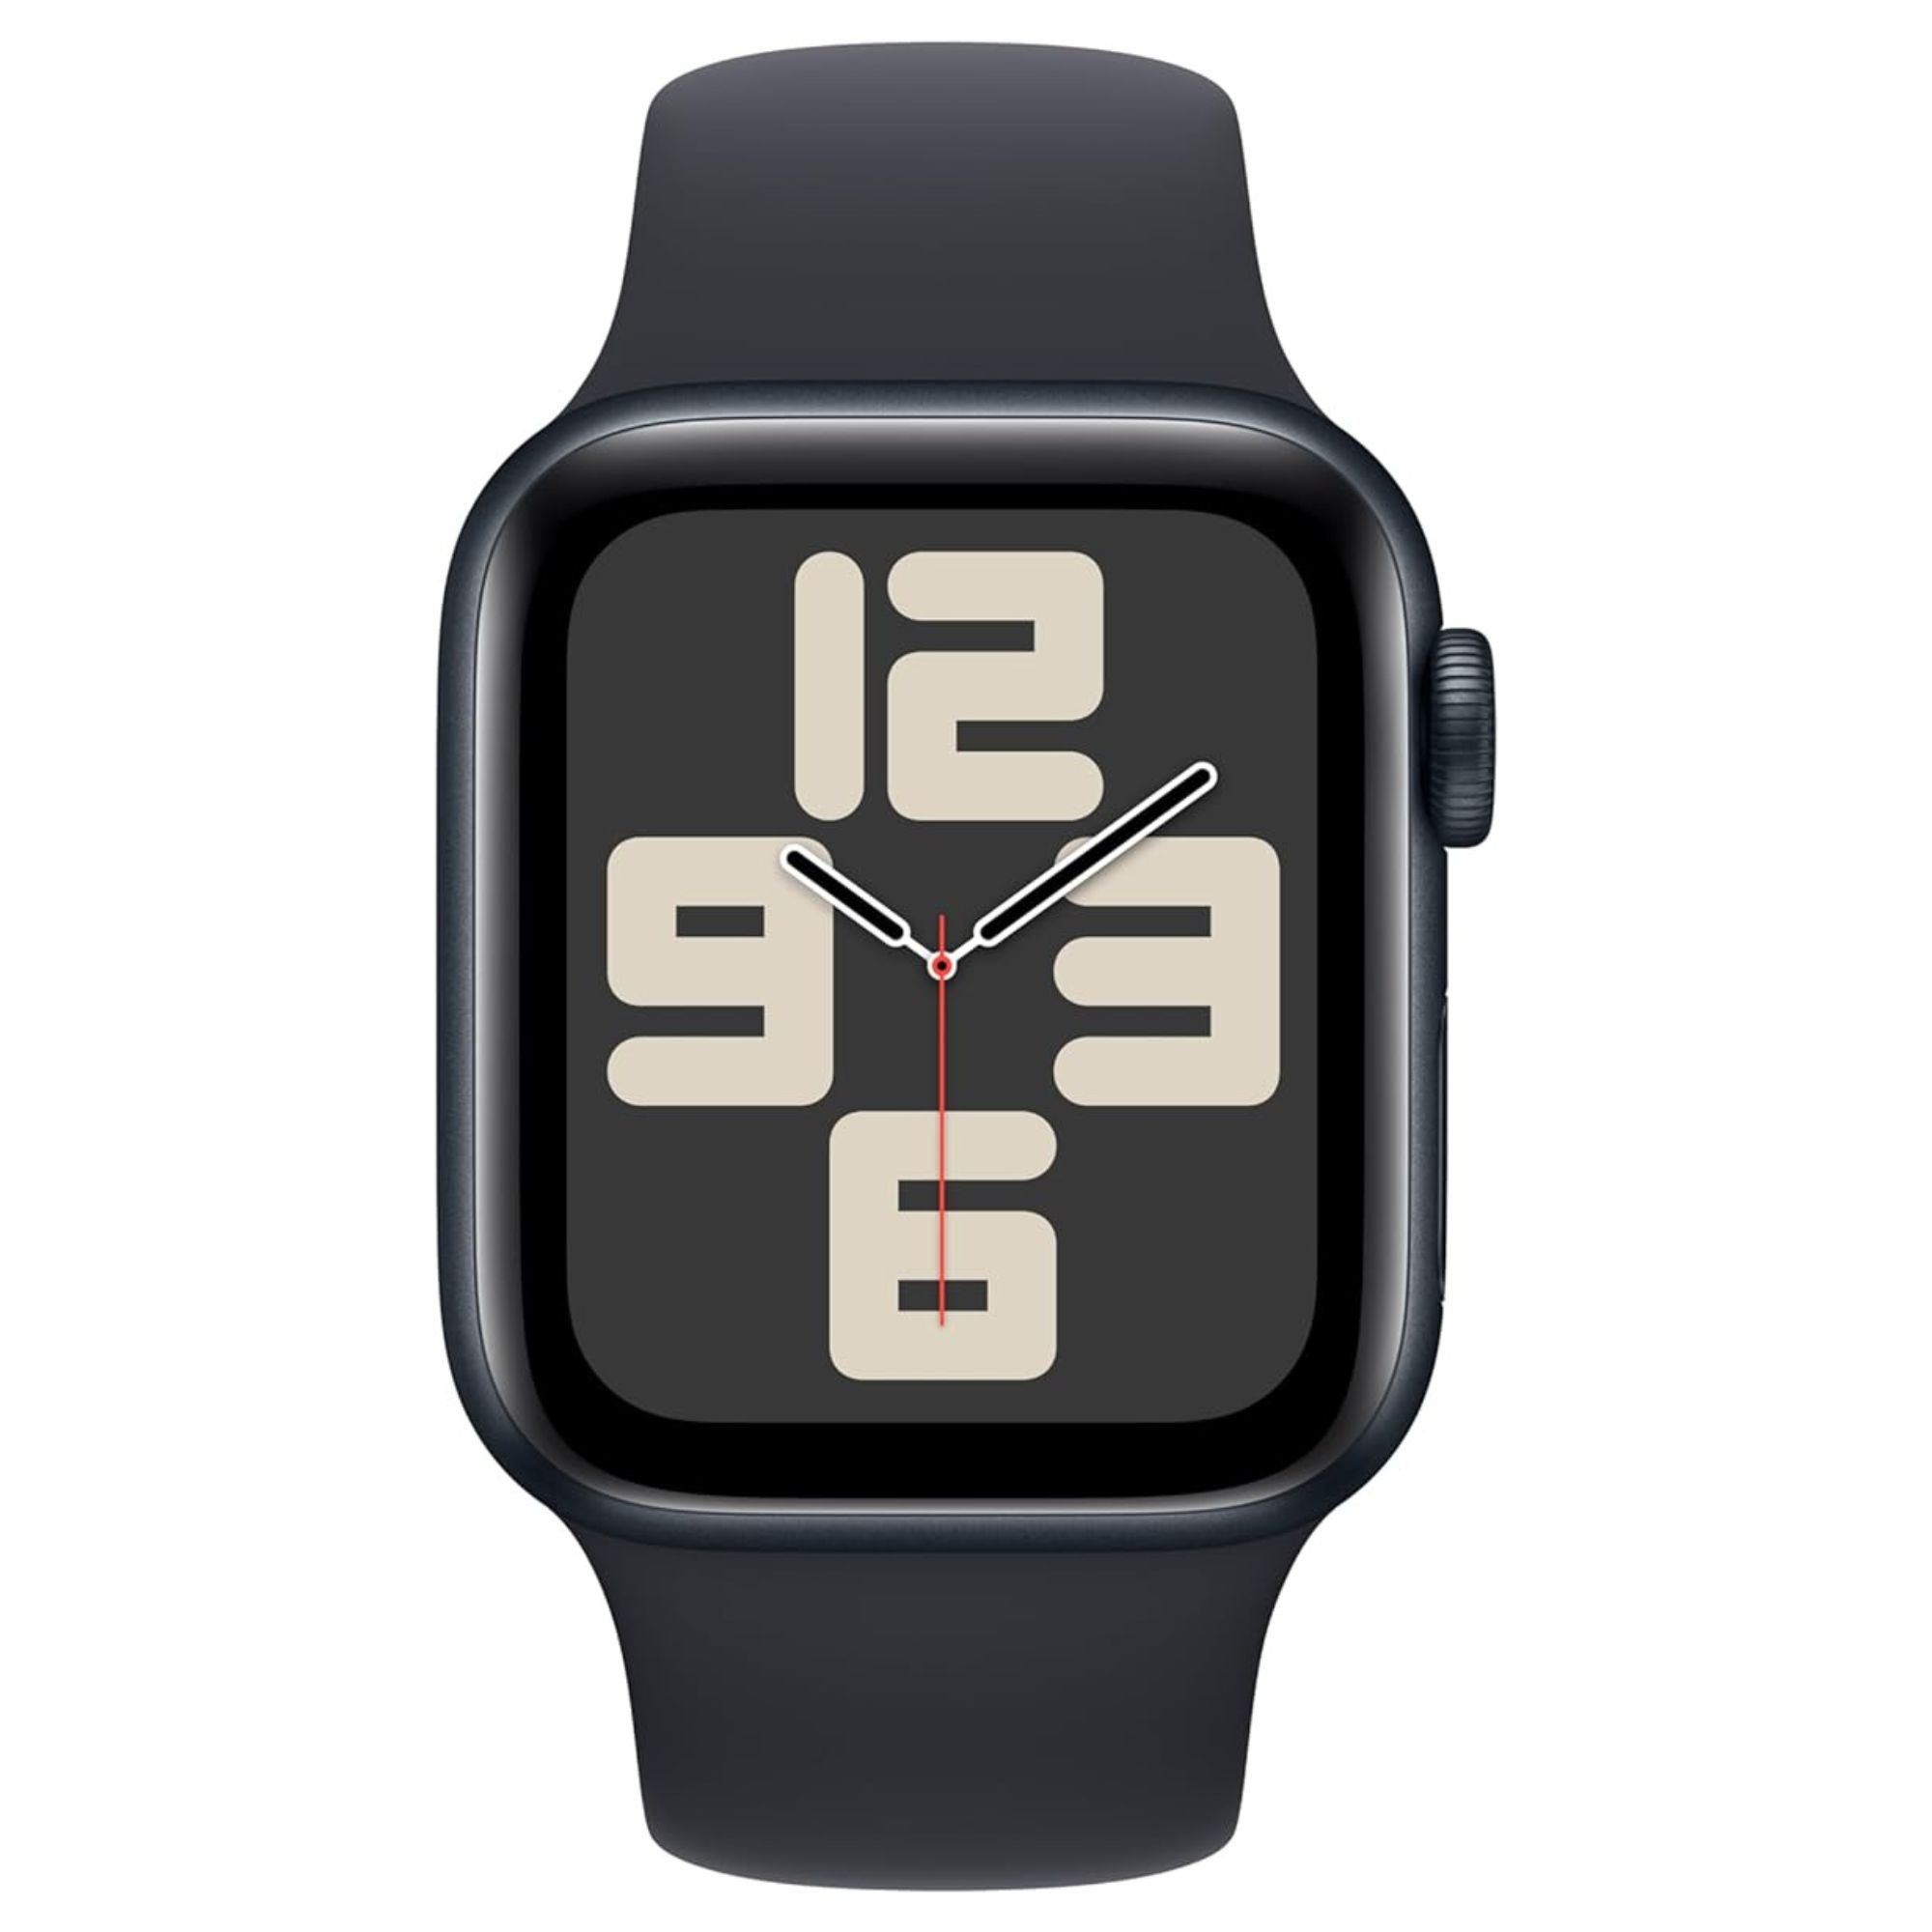 apple watch SE 2nd gen best amazon prime day deals for smartwatches